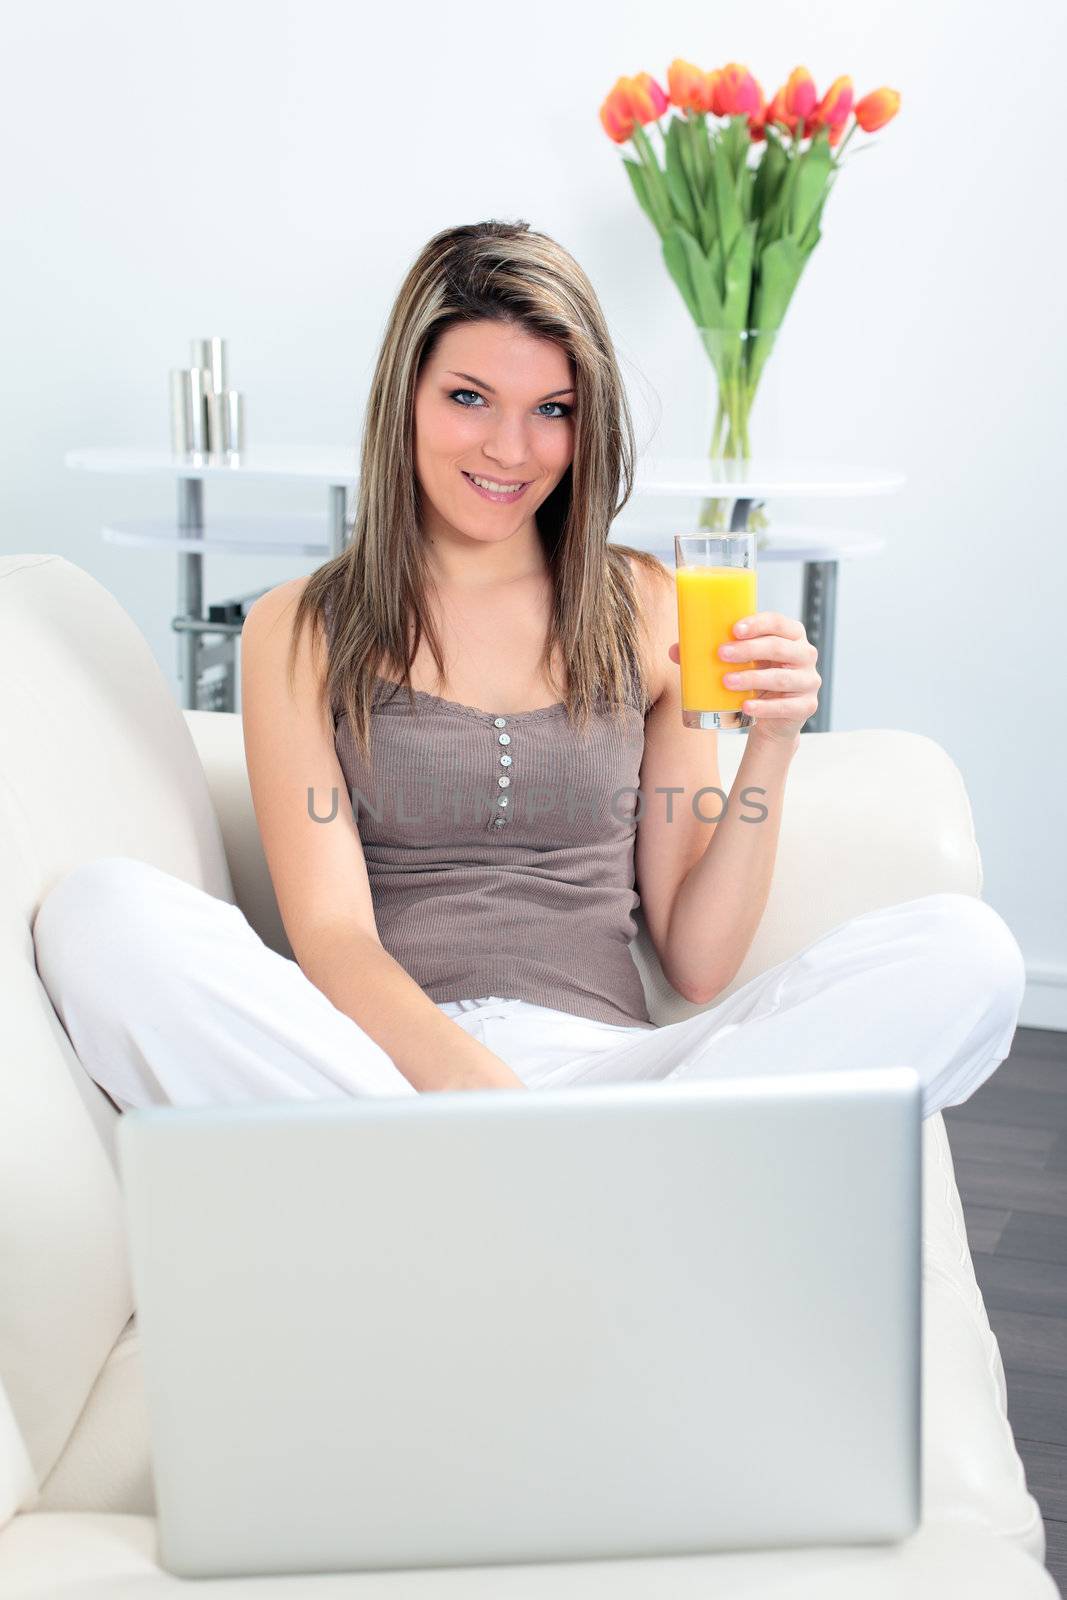 internet and orange juice by vwalakte